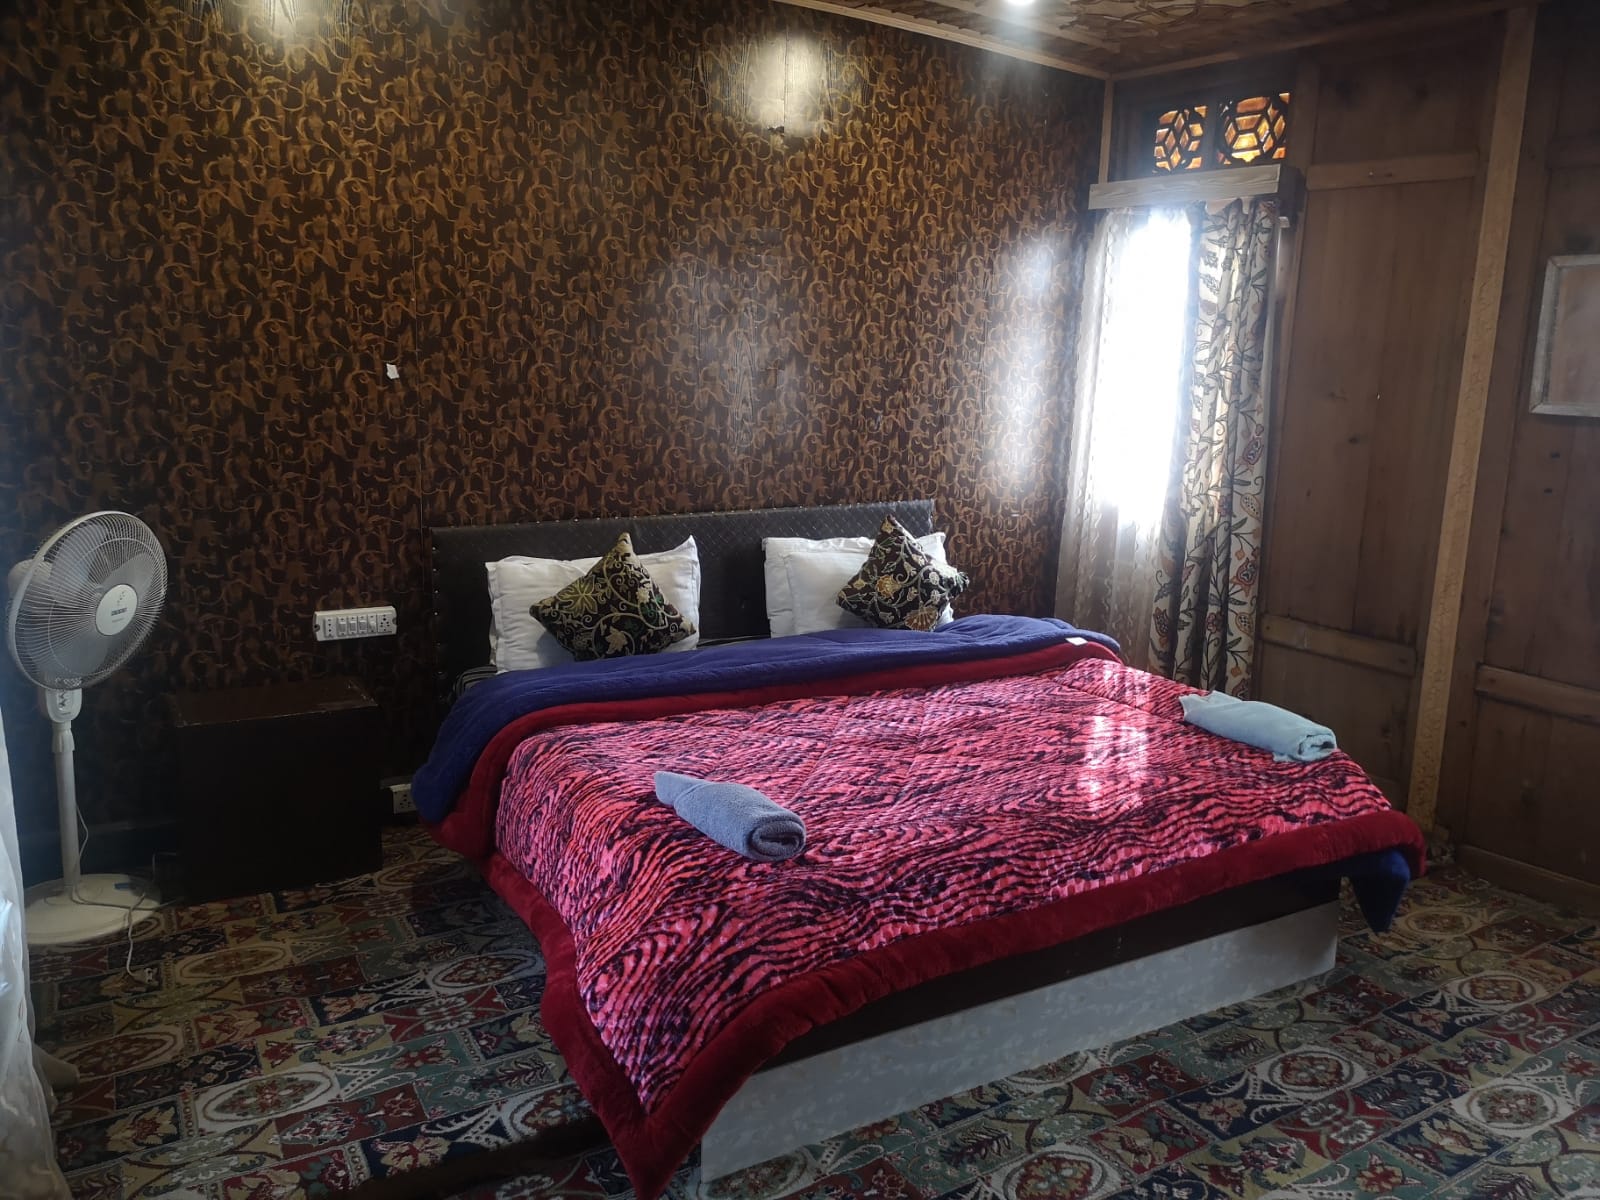 اتاق خانه قایقی داندو در کشمیر